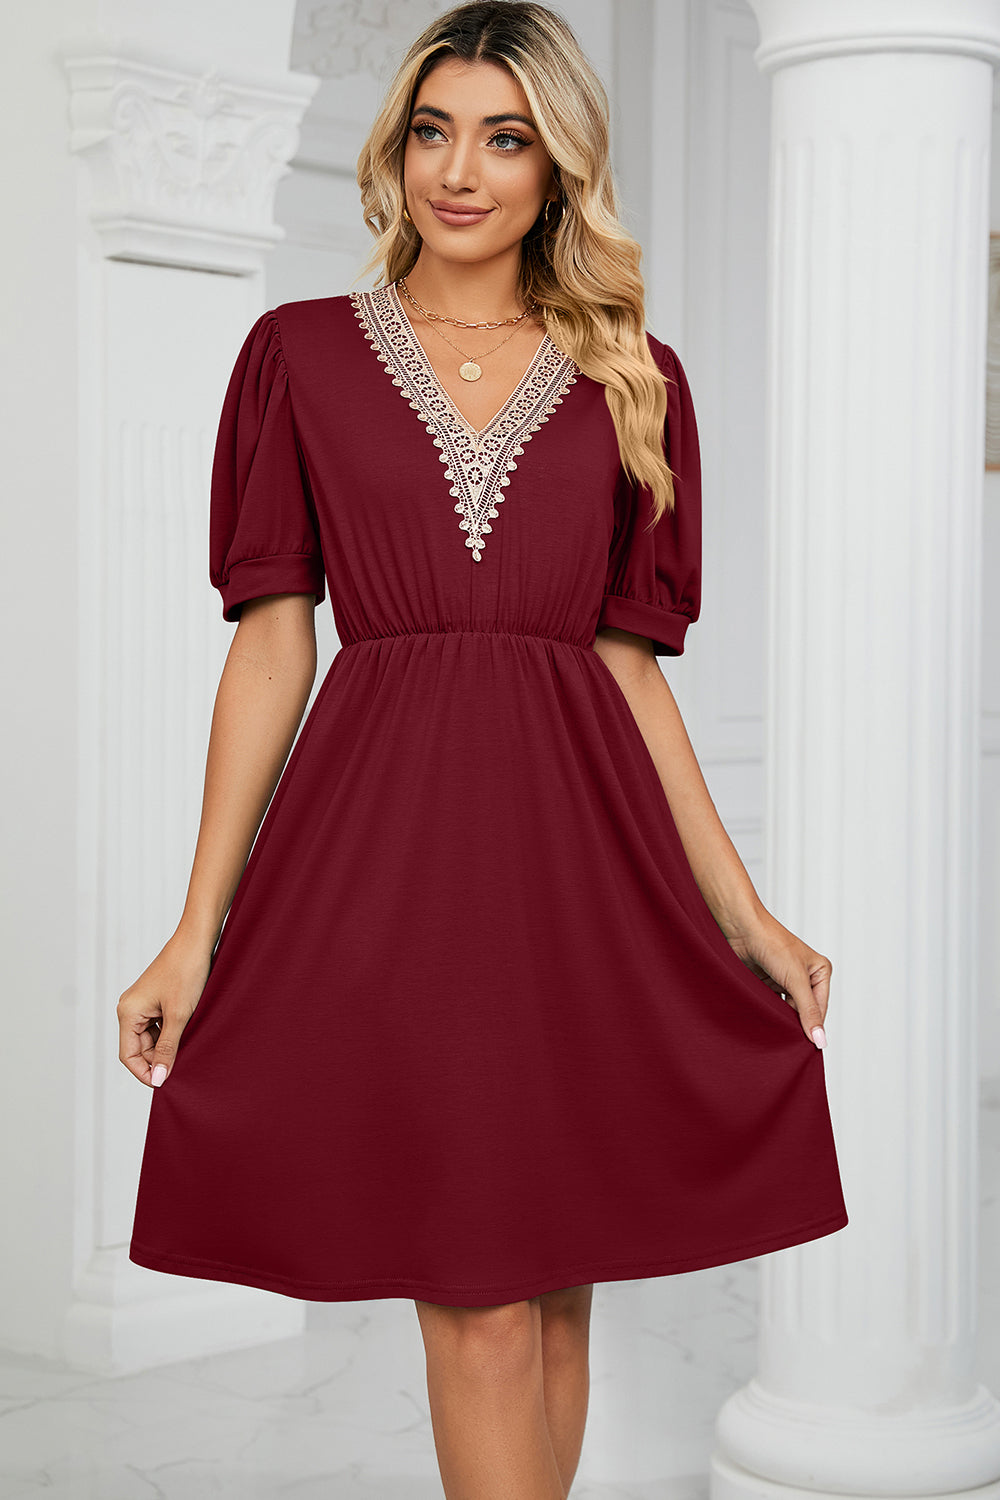 V-Neck Puff Sleeve Dress (8 Colors) Dress Krazy Heart Designs Boutique Wine S 